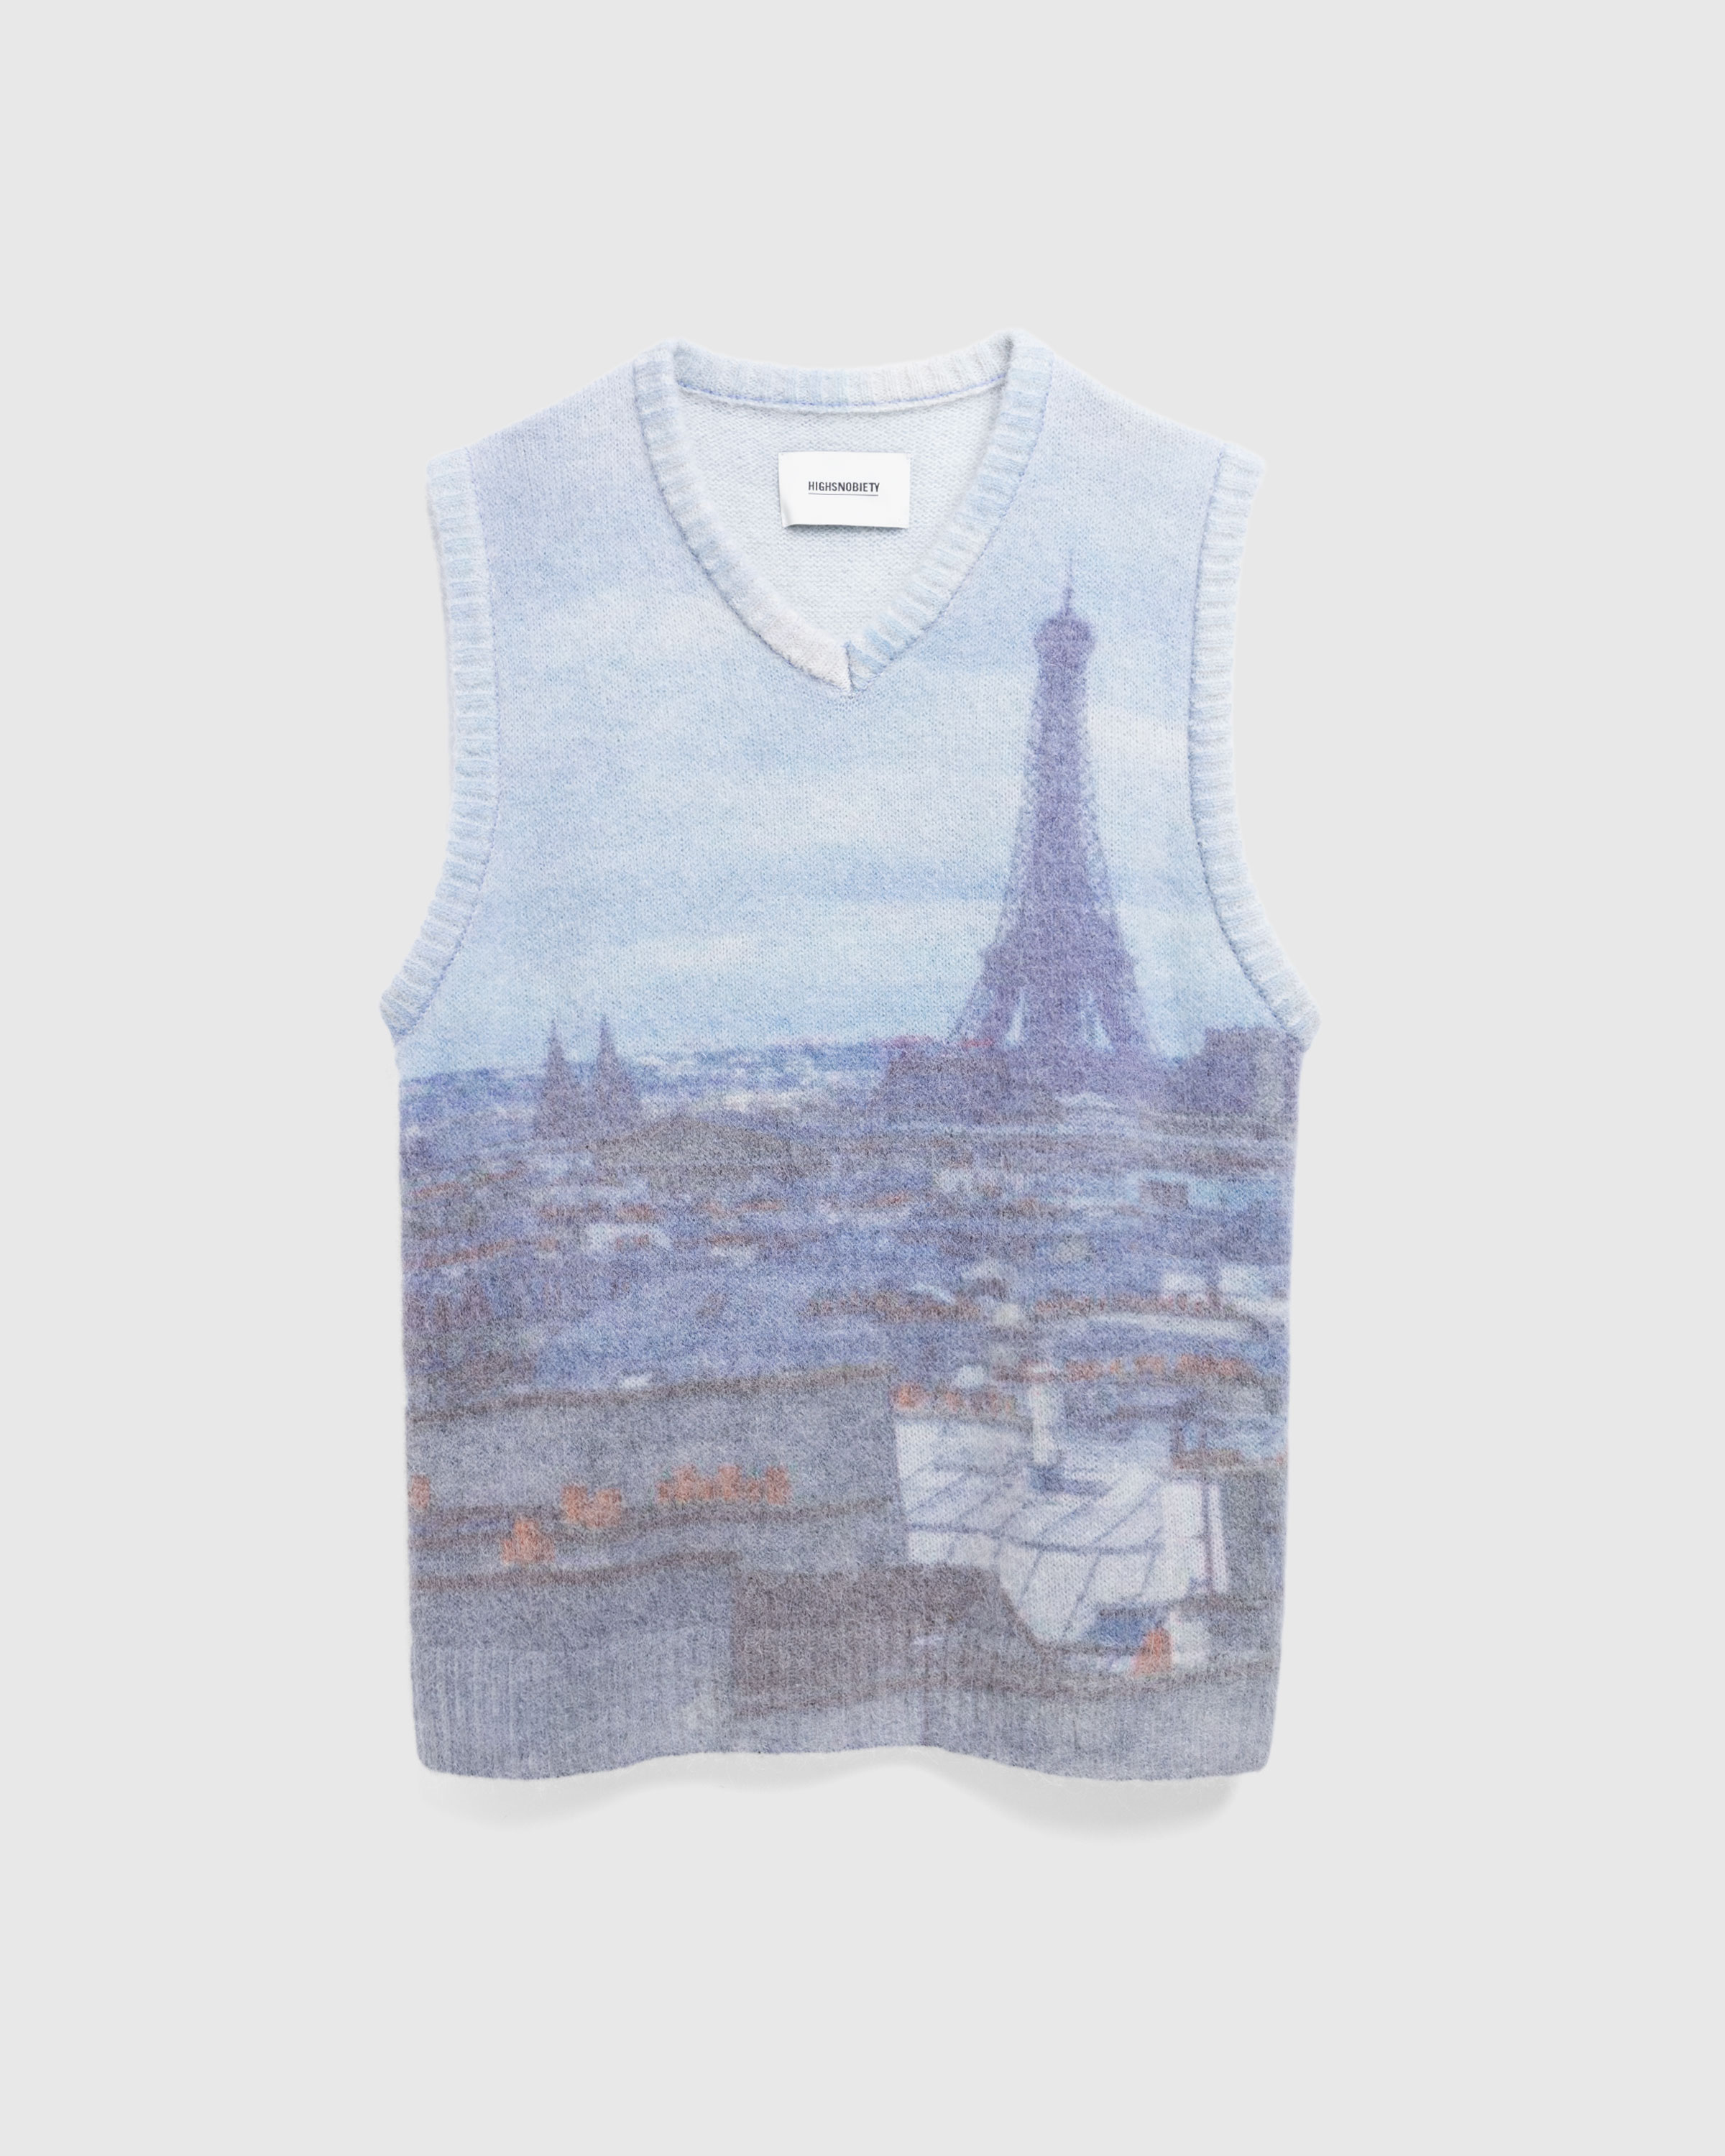 Highsnobiety – Paris Cityscape Sweater Vest Multi - Knitwear - Multi - Image 1